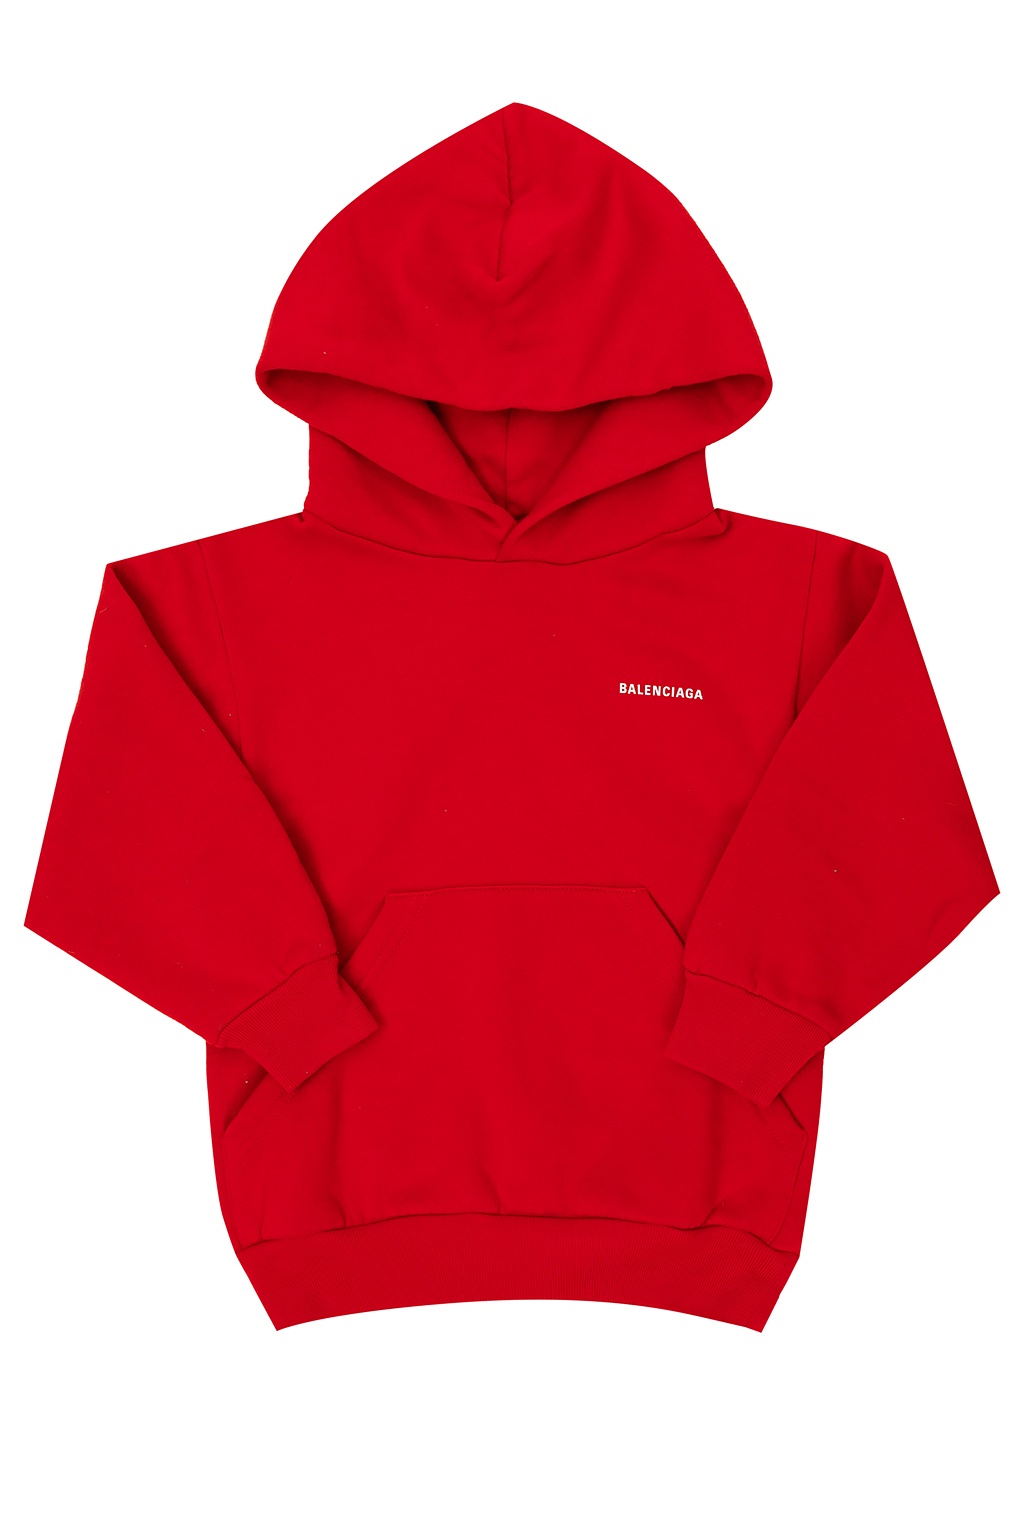 balenciaga red logo hoodie